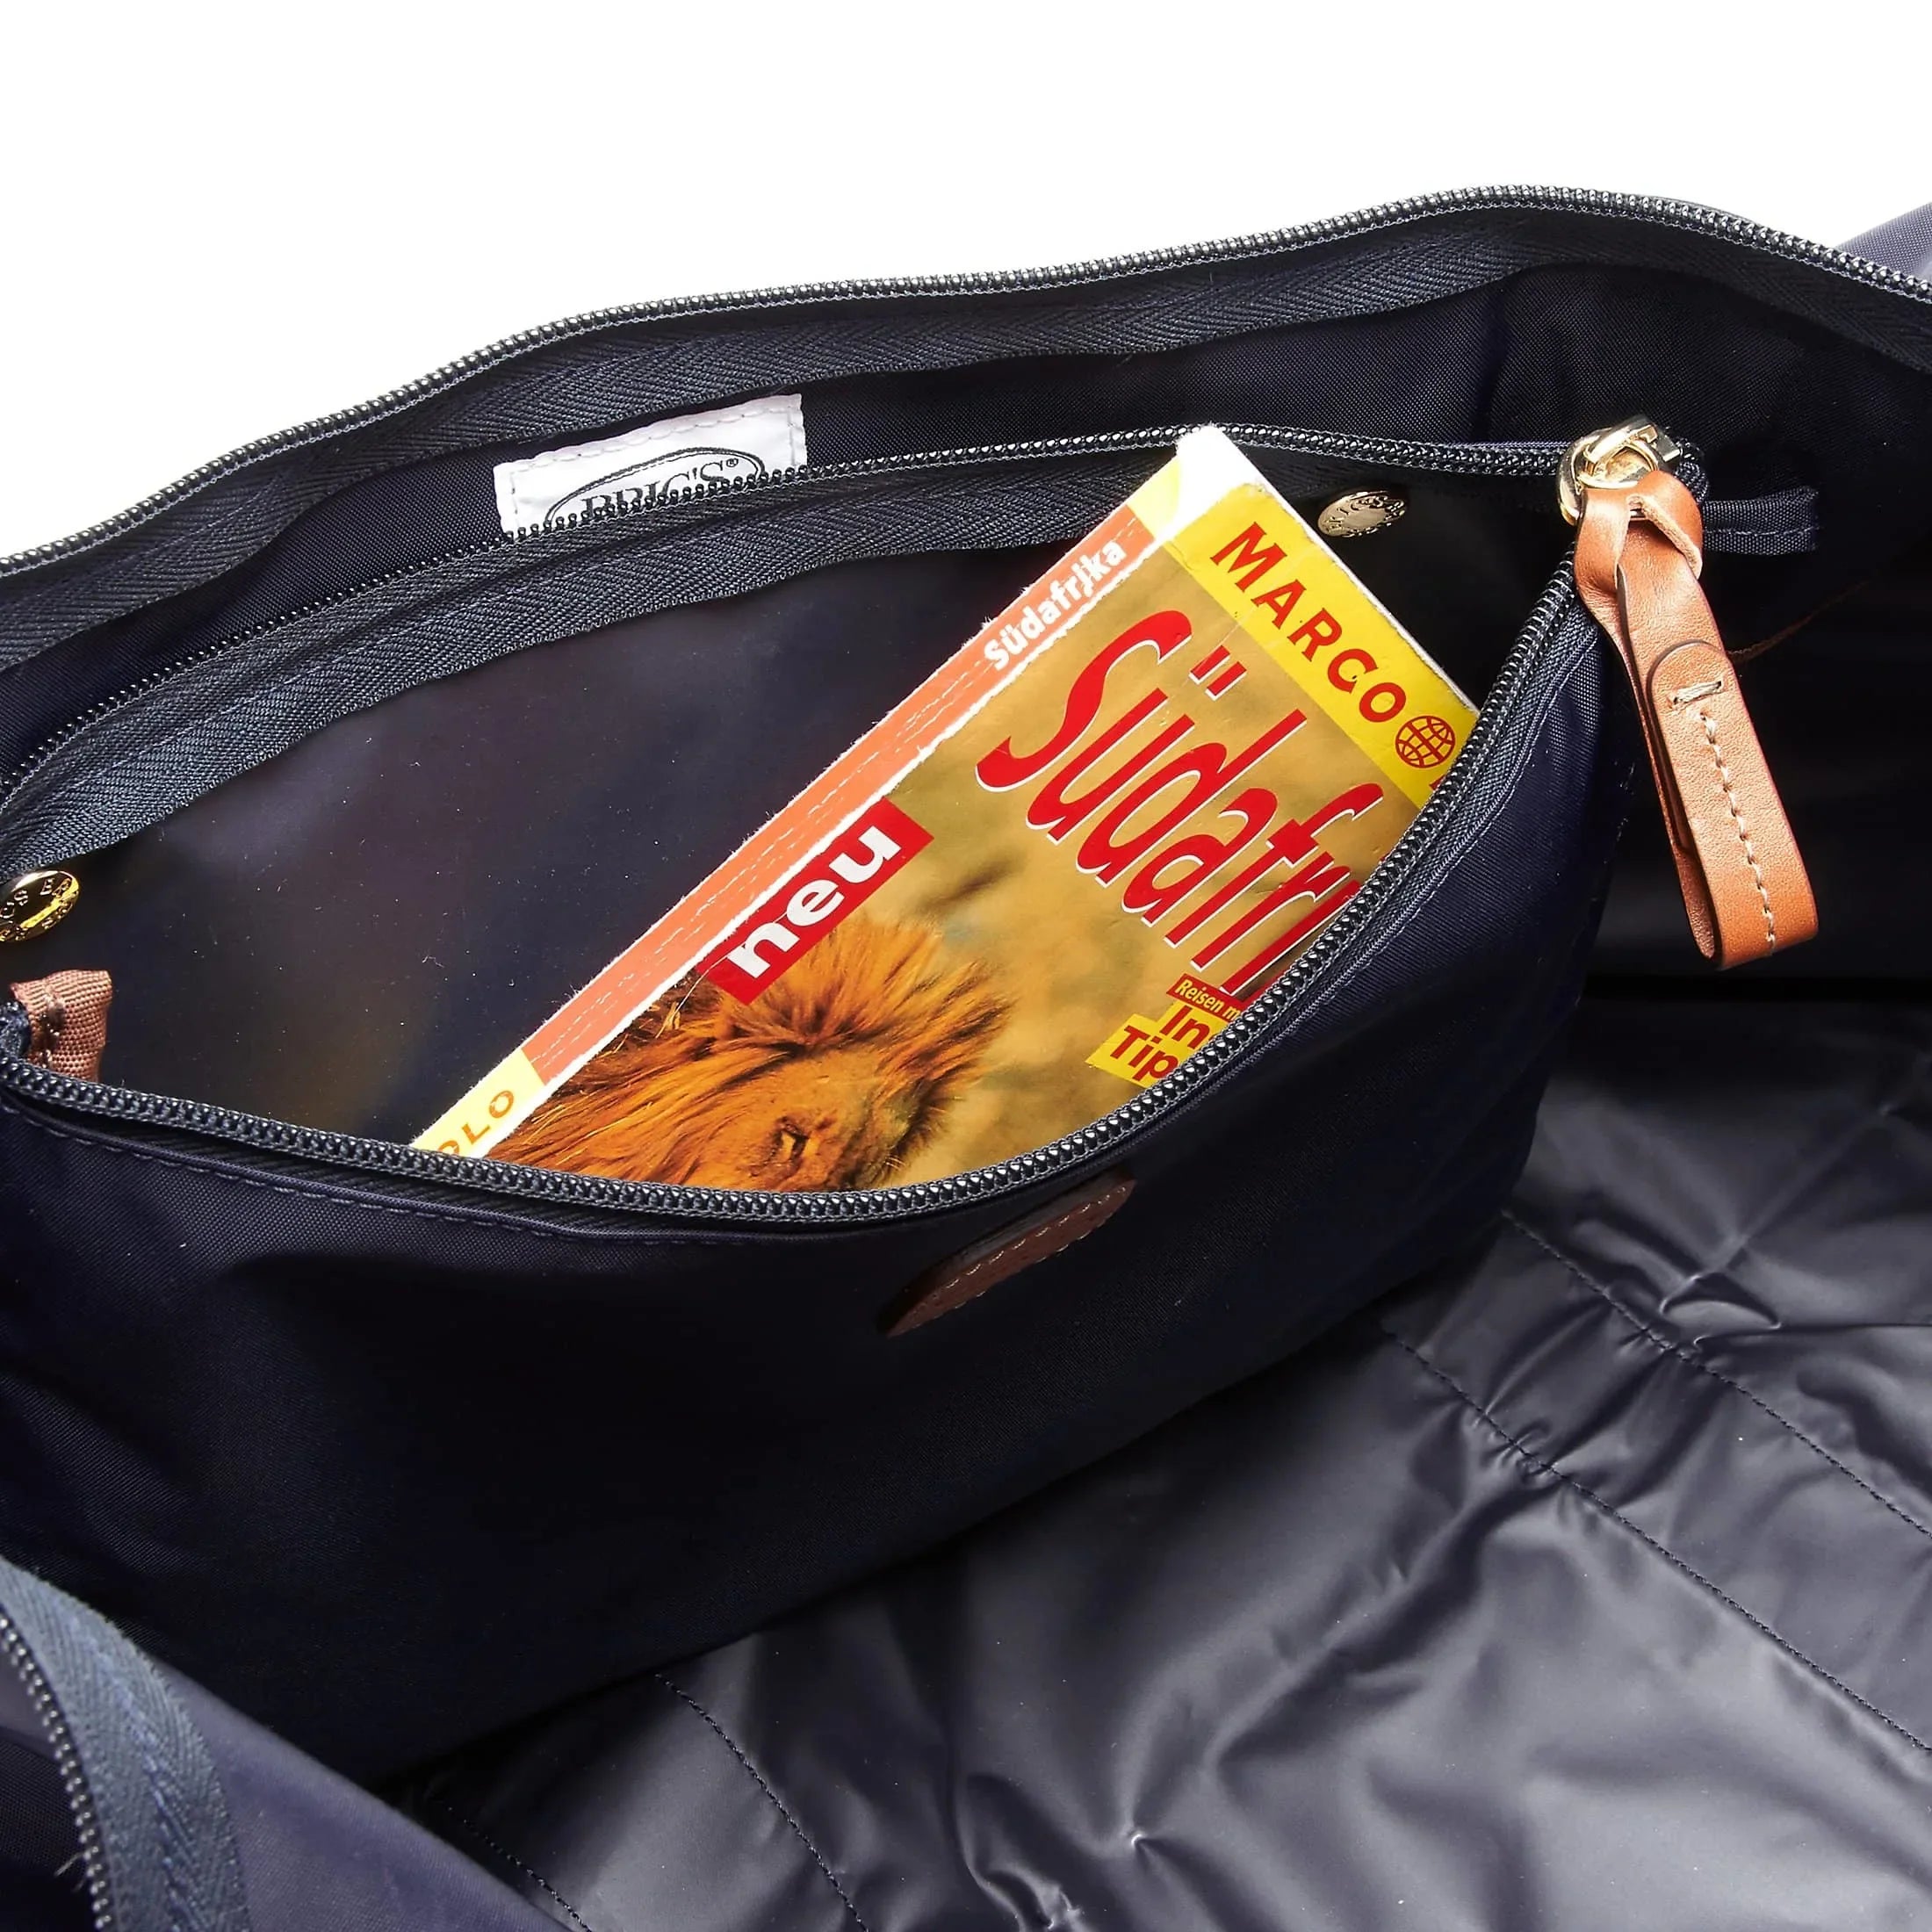 Brics X-Bag travel bag 55 cm - Red